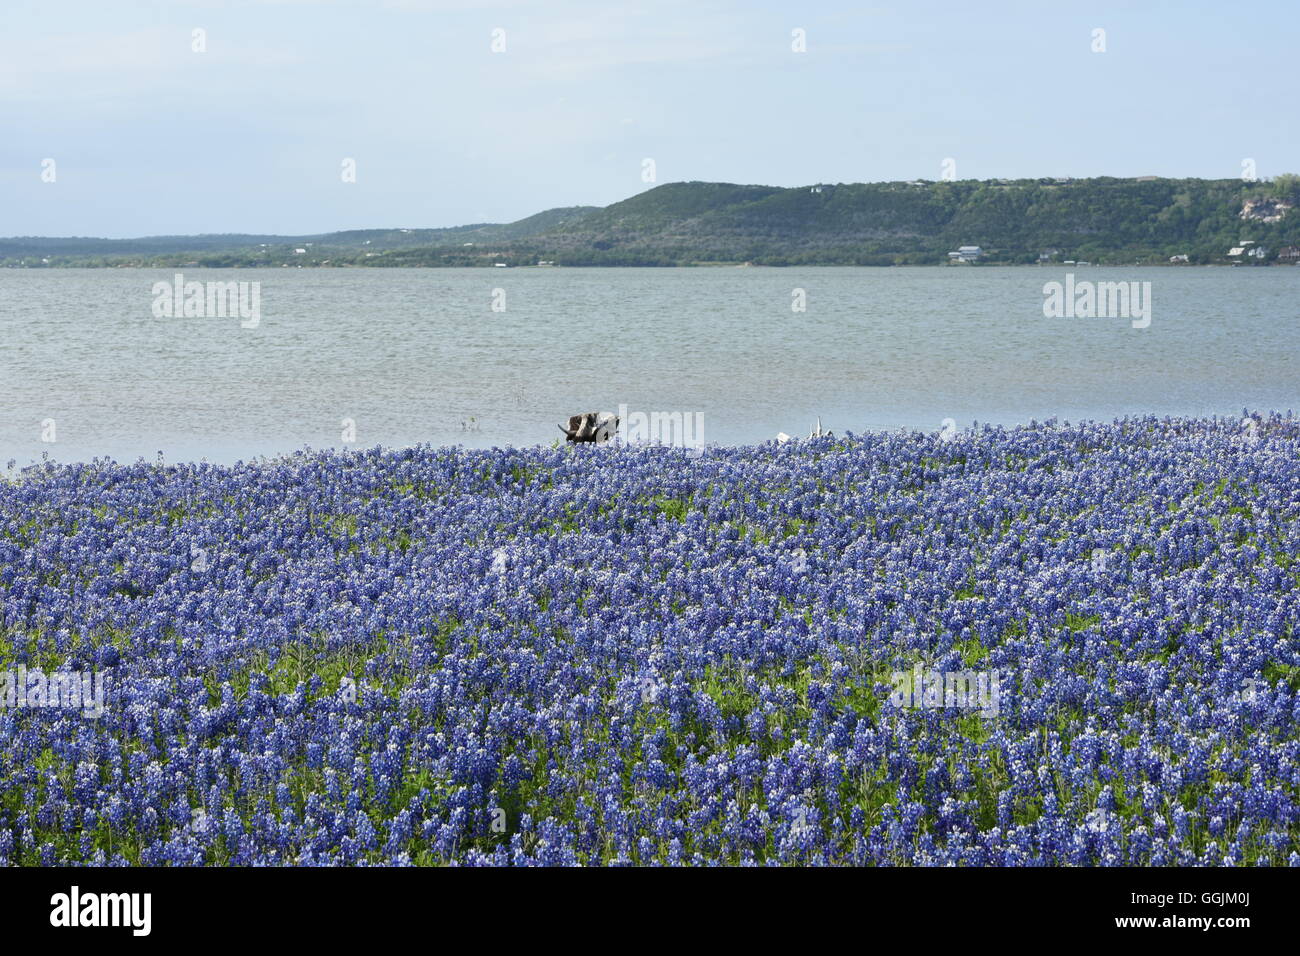 Bereich der Lupinus Texensis, Texas Lupine oder Texas Bluebonnet, am Ufer des Lake Buchanan in Zentral-Texas Stockfoto